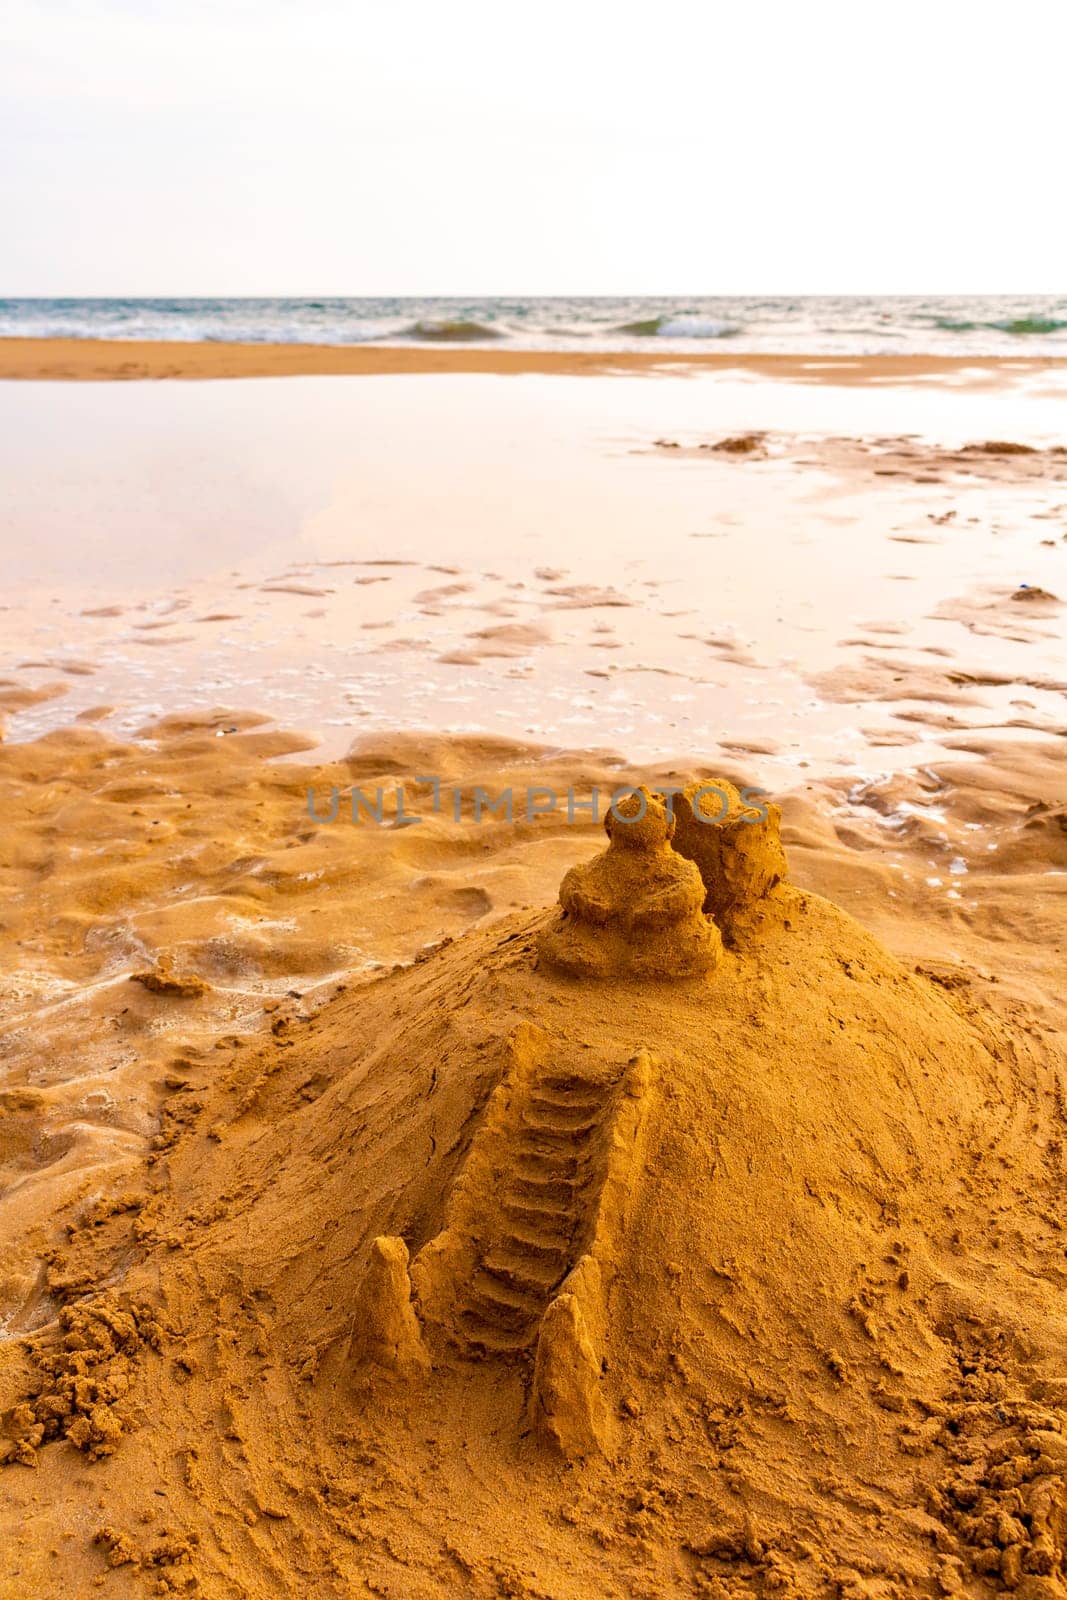 Temple of sand like a sandcastle Bentota Beach Sri Lanka. by Arkadij